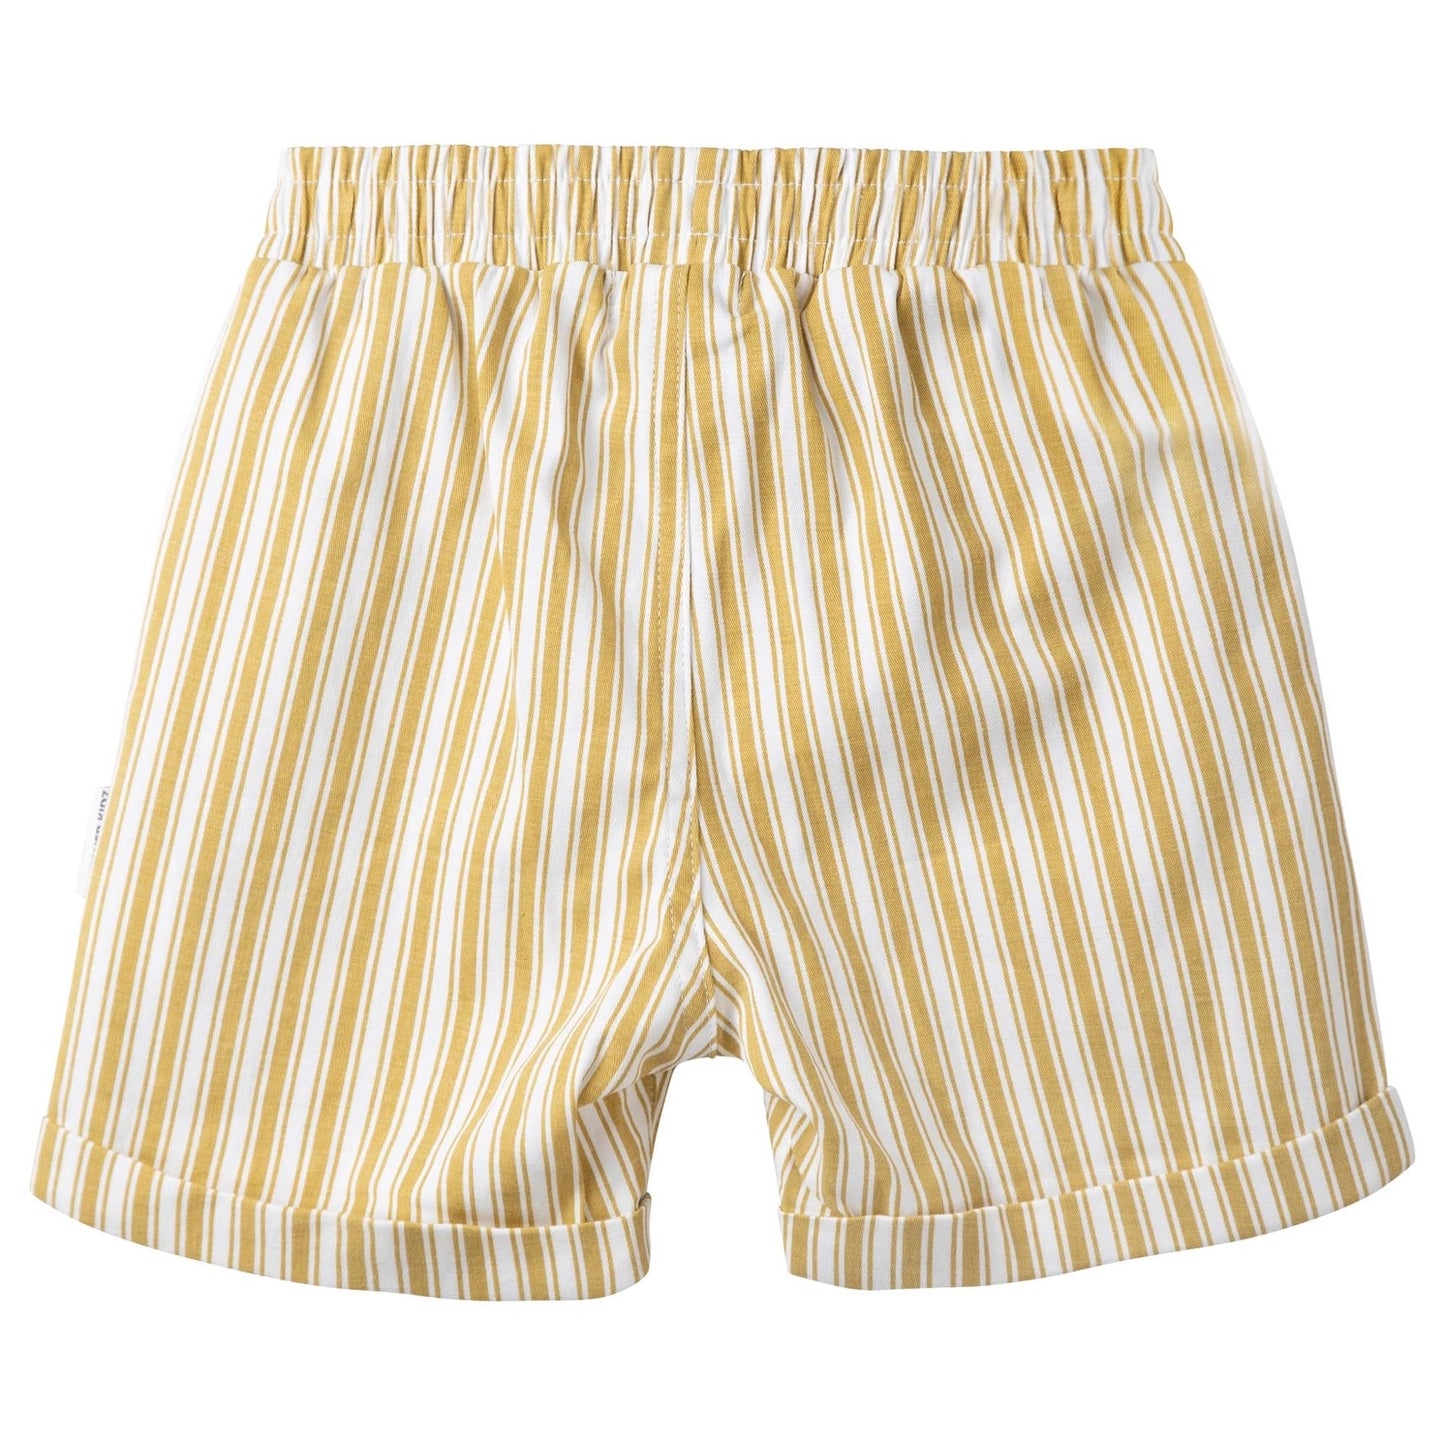 Charlie Stripe Shorts - Mustard